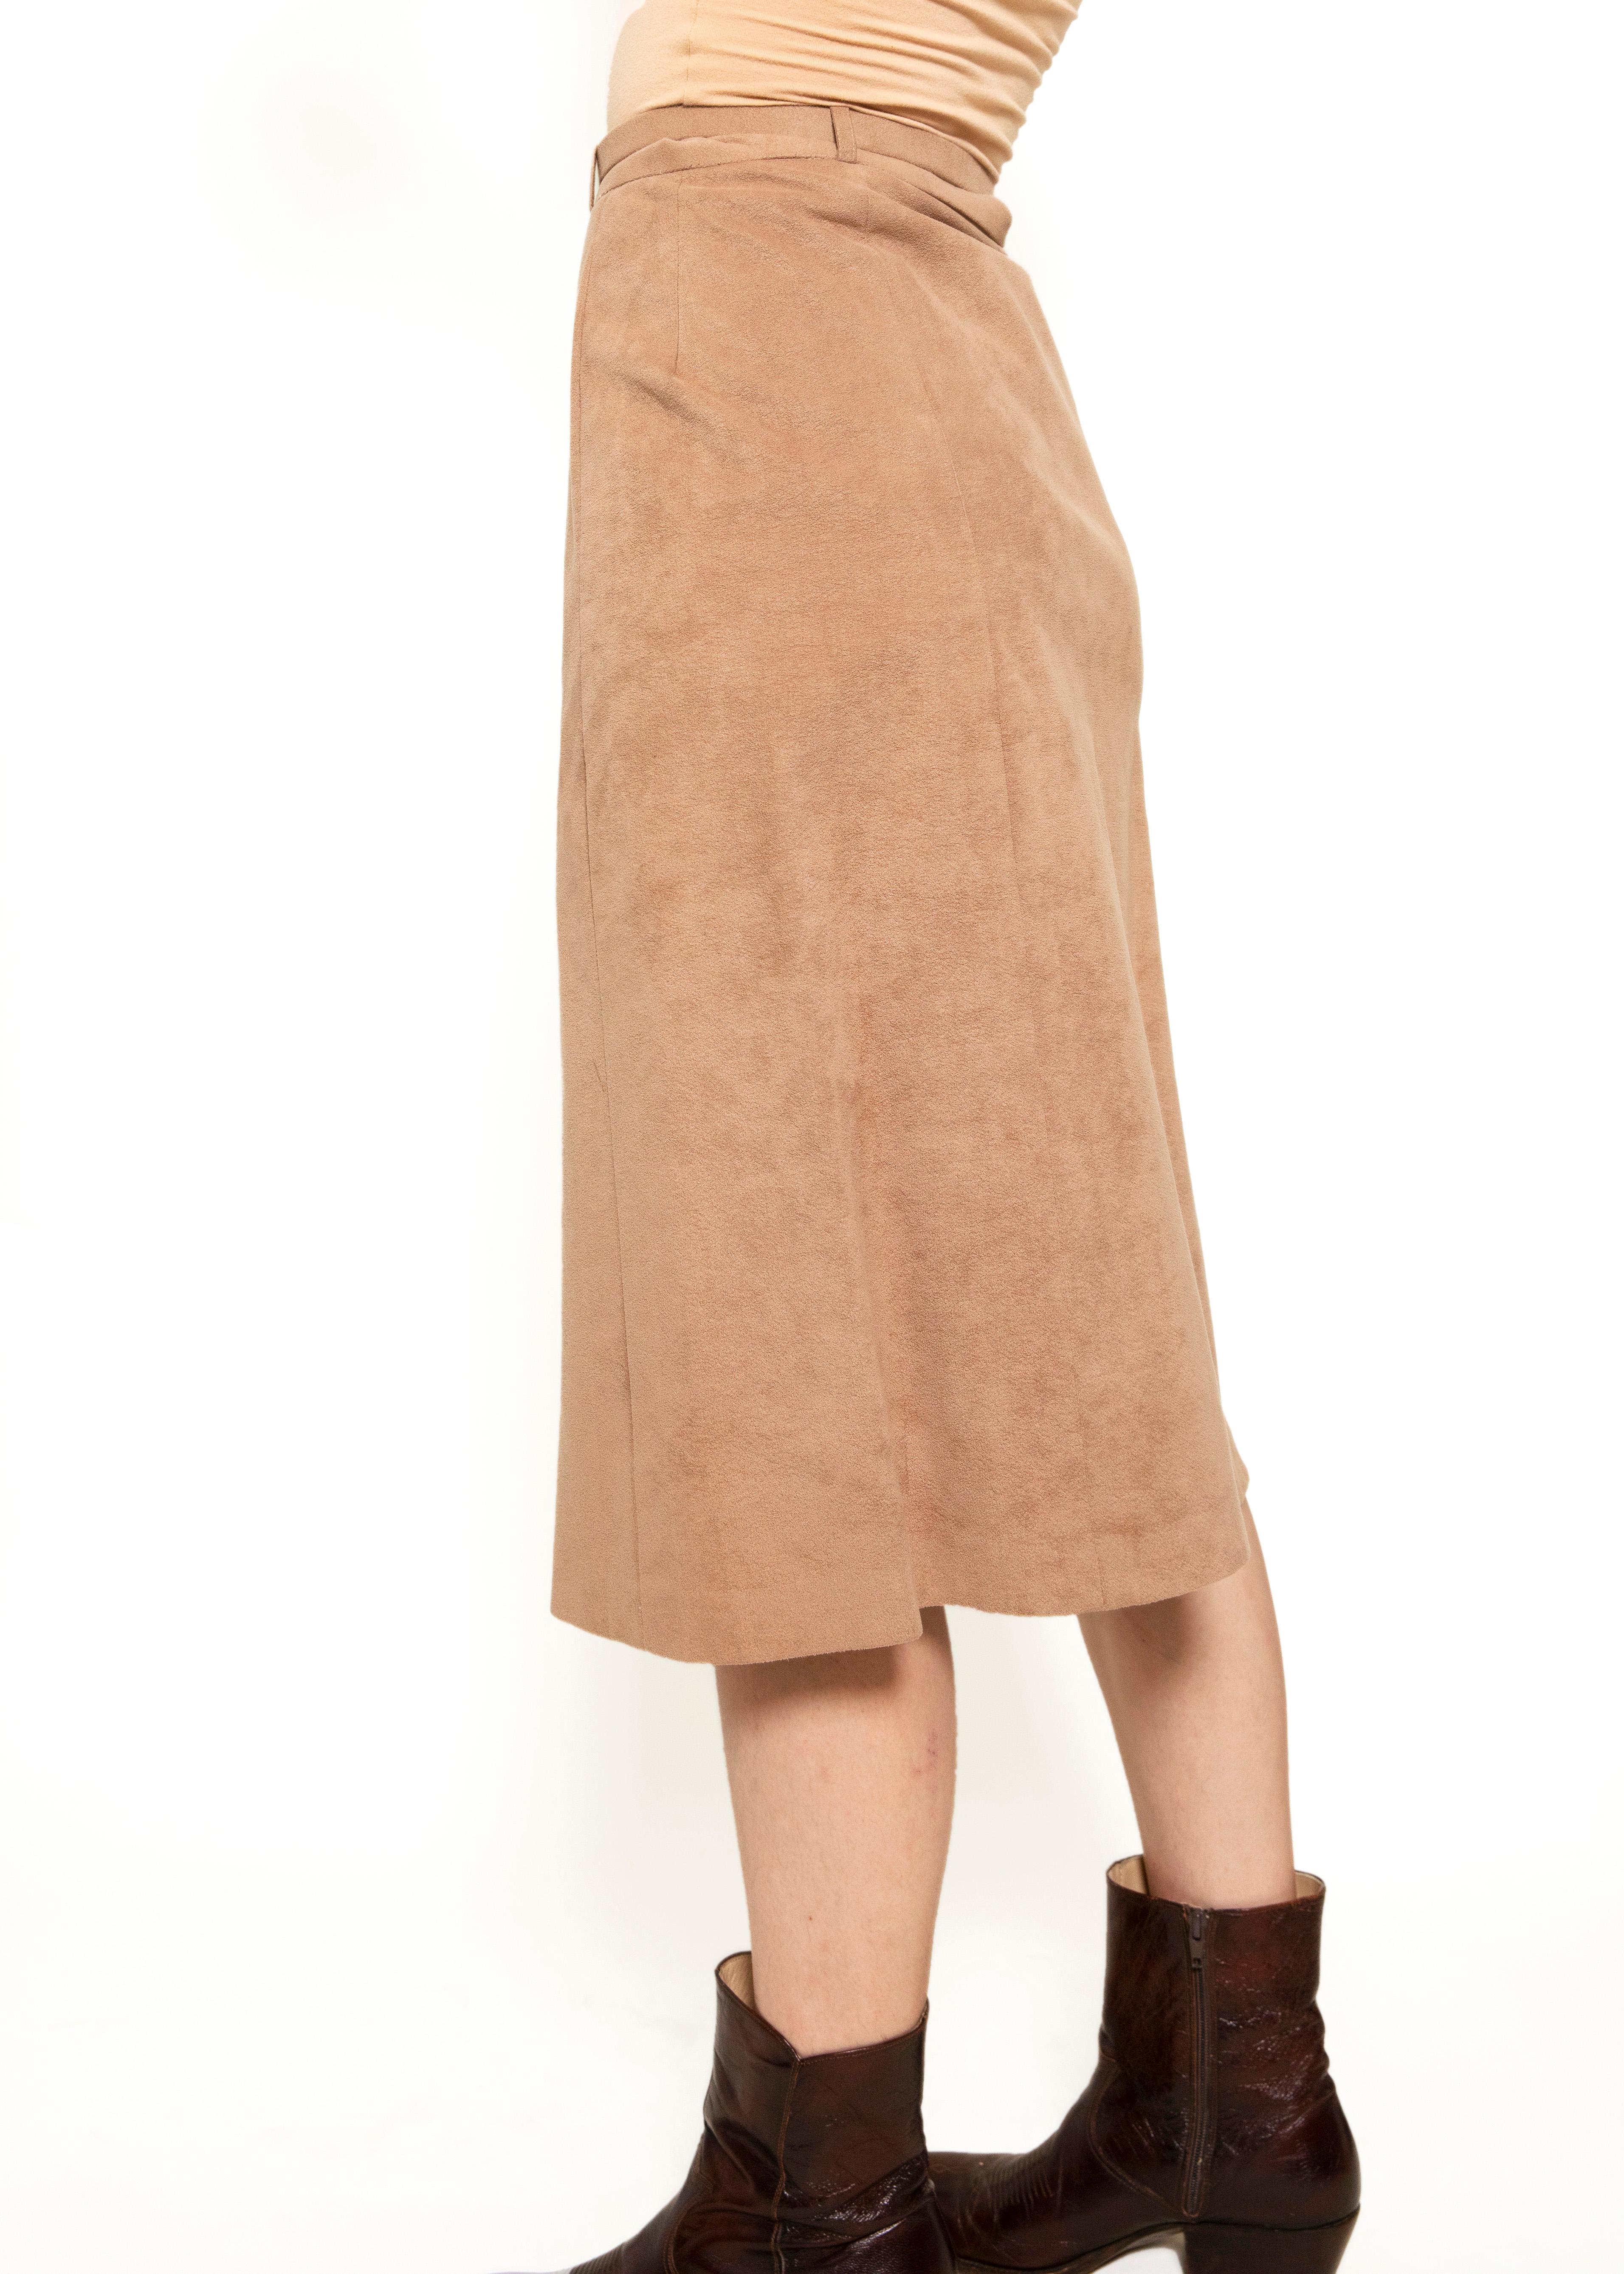 Ultrasuede Skirt & Trench Set For Sale 1